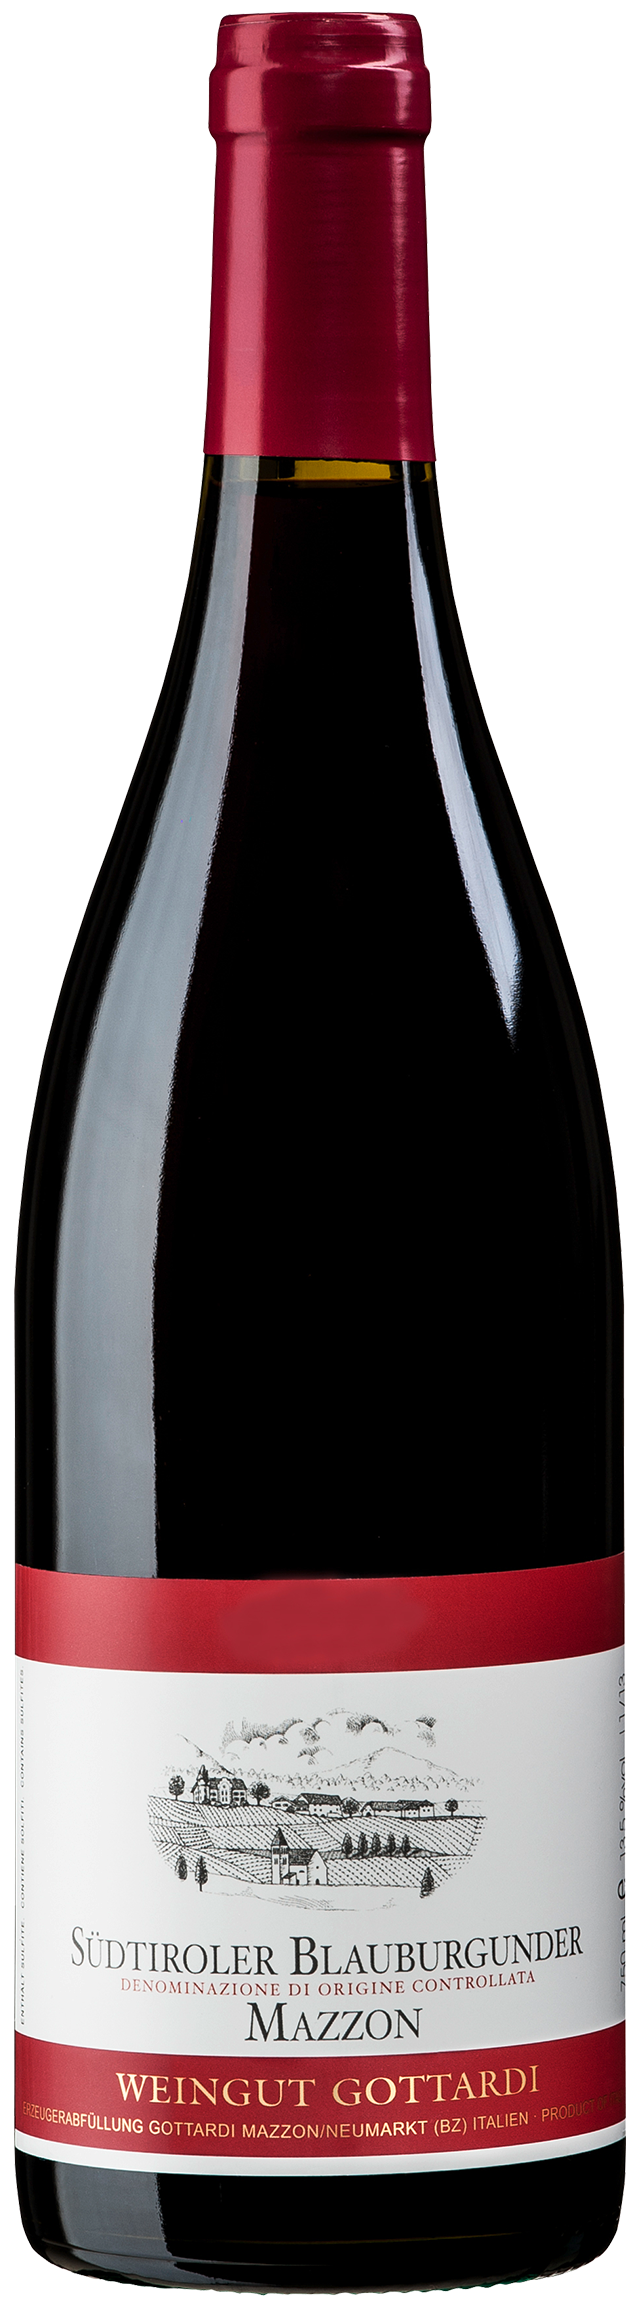 Pinot Nero Alto Adige Mazzon 2017 - Weingut Gottardi Mazzon